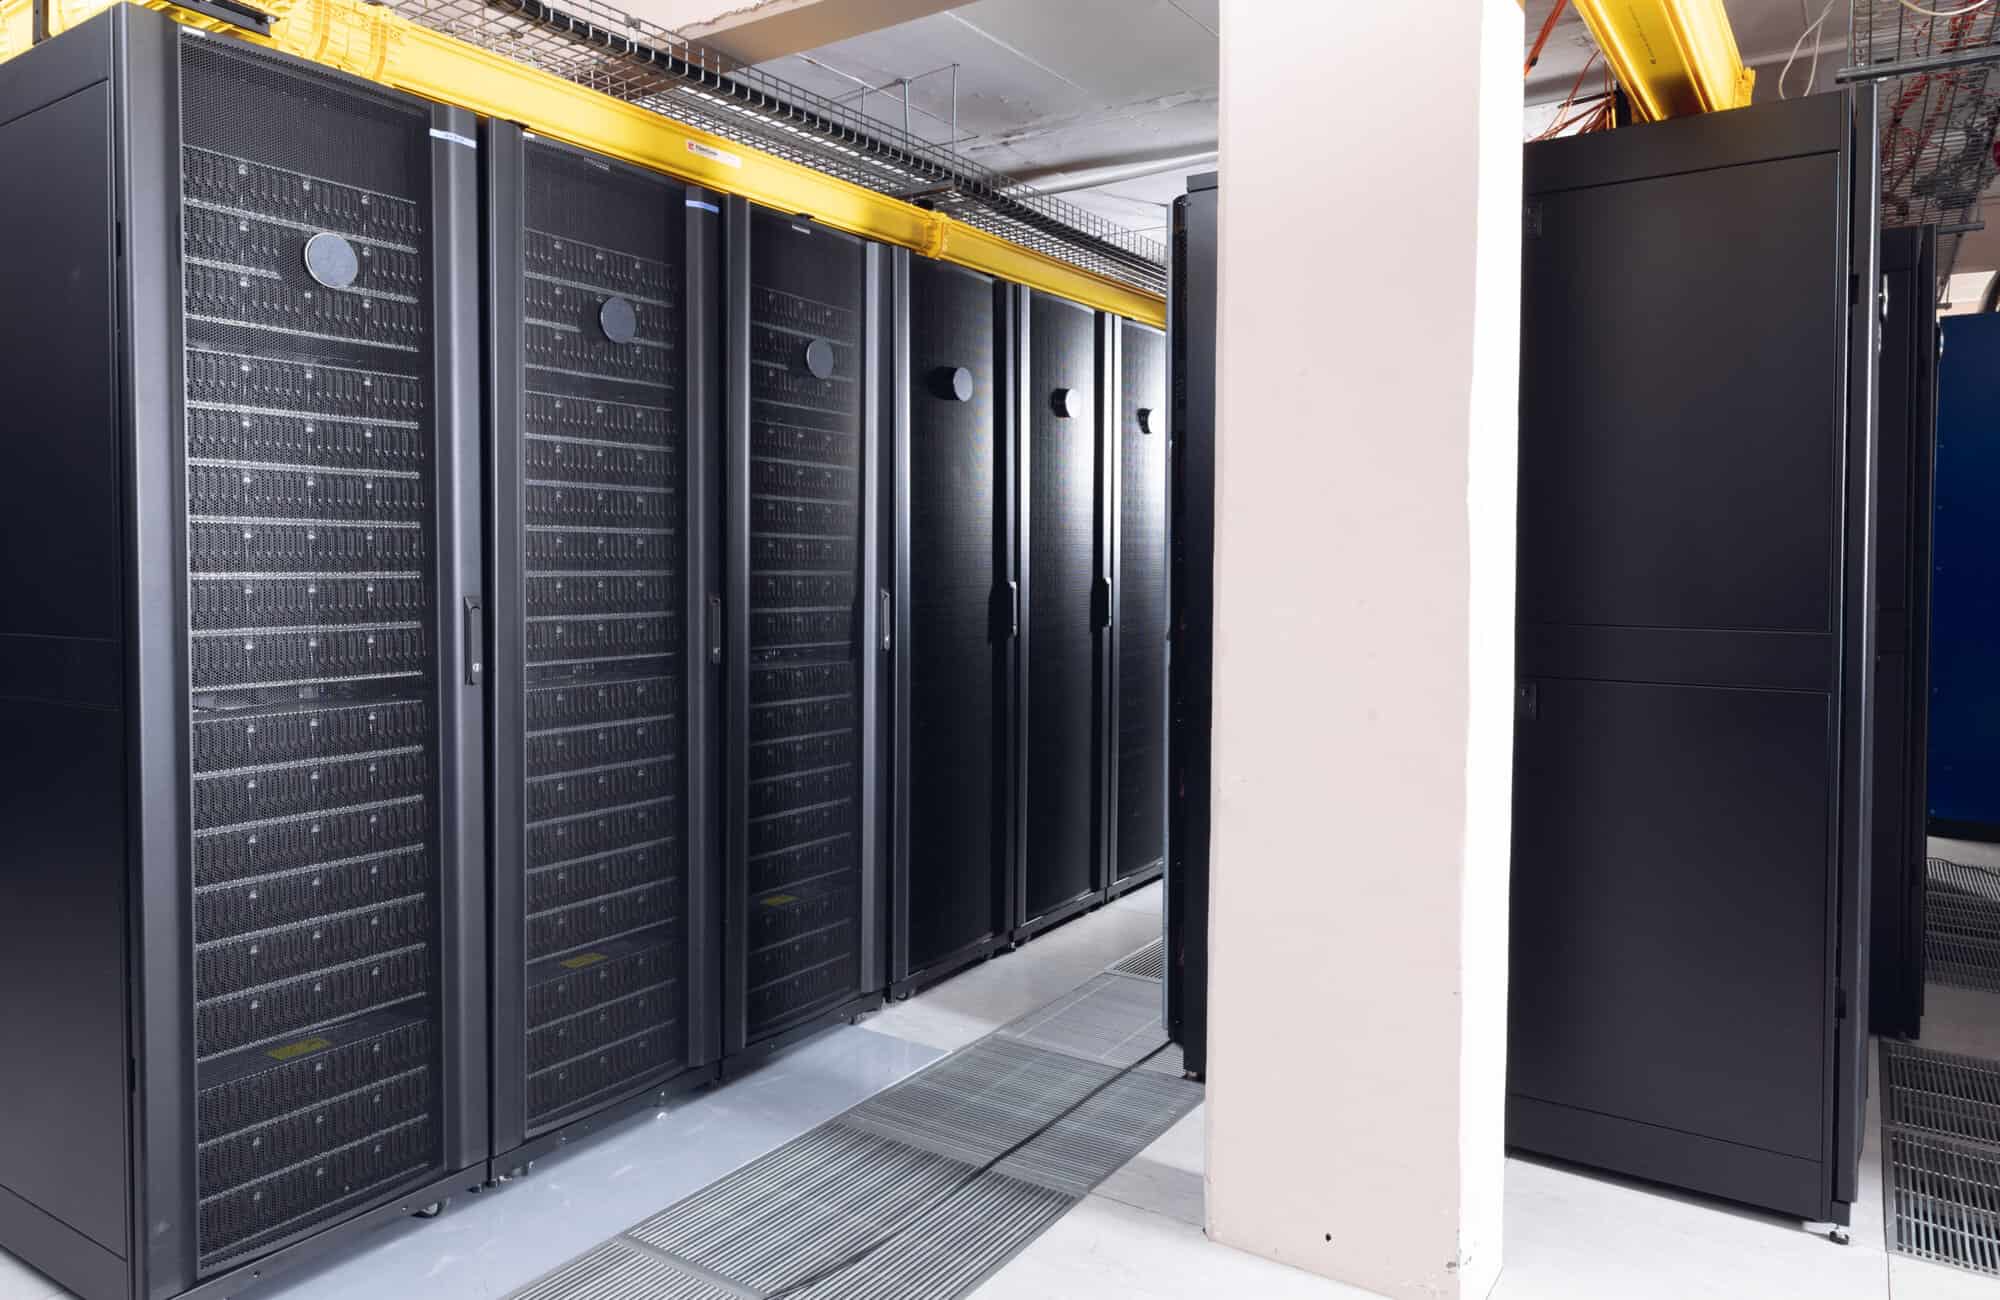 Data center with operational server stacks and live sensor data for digital twins.